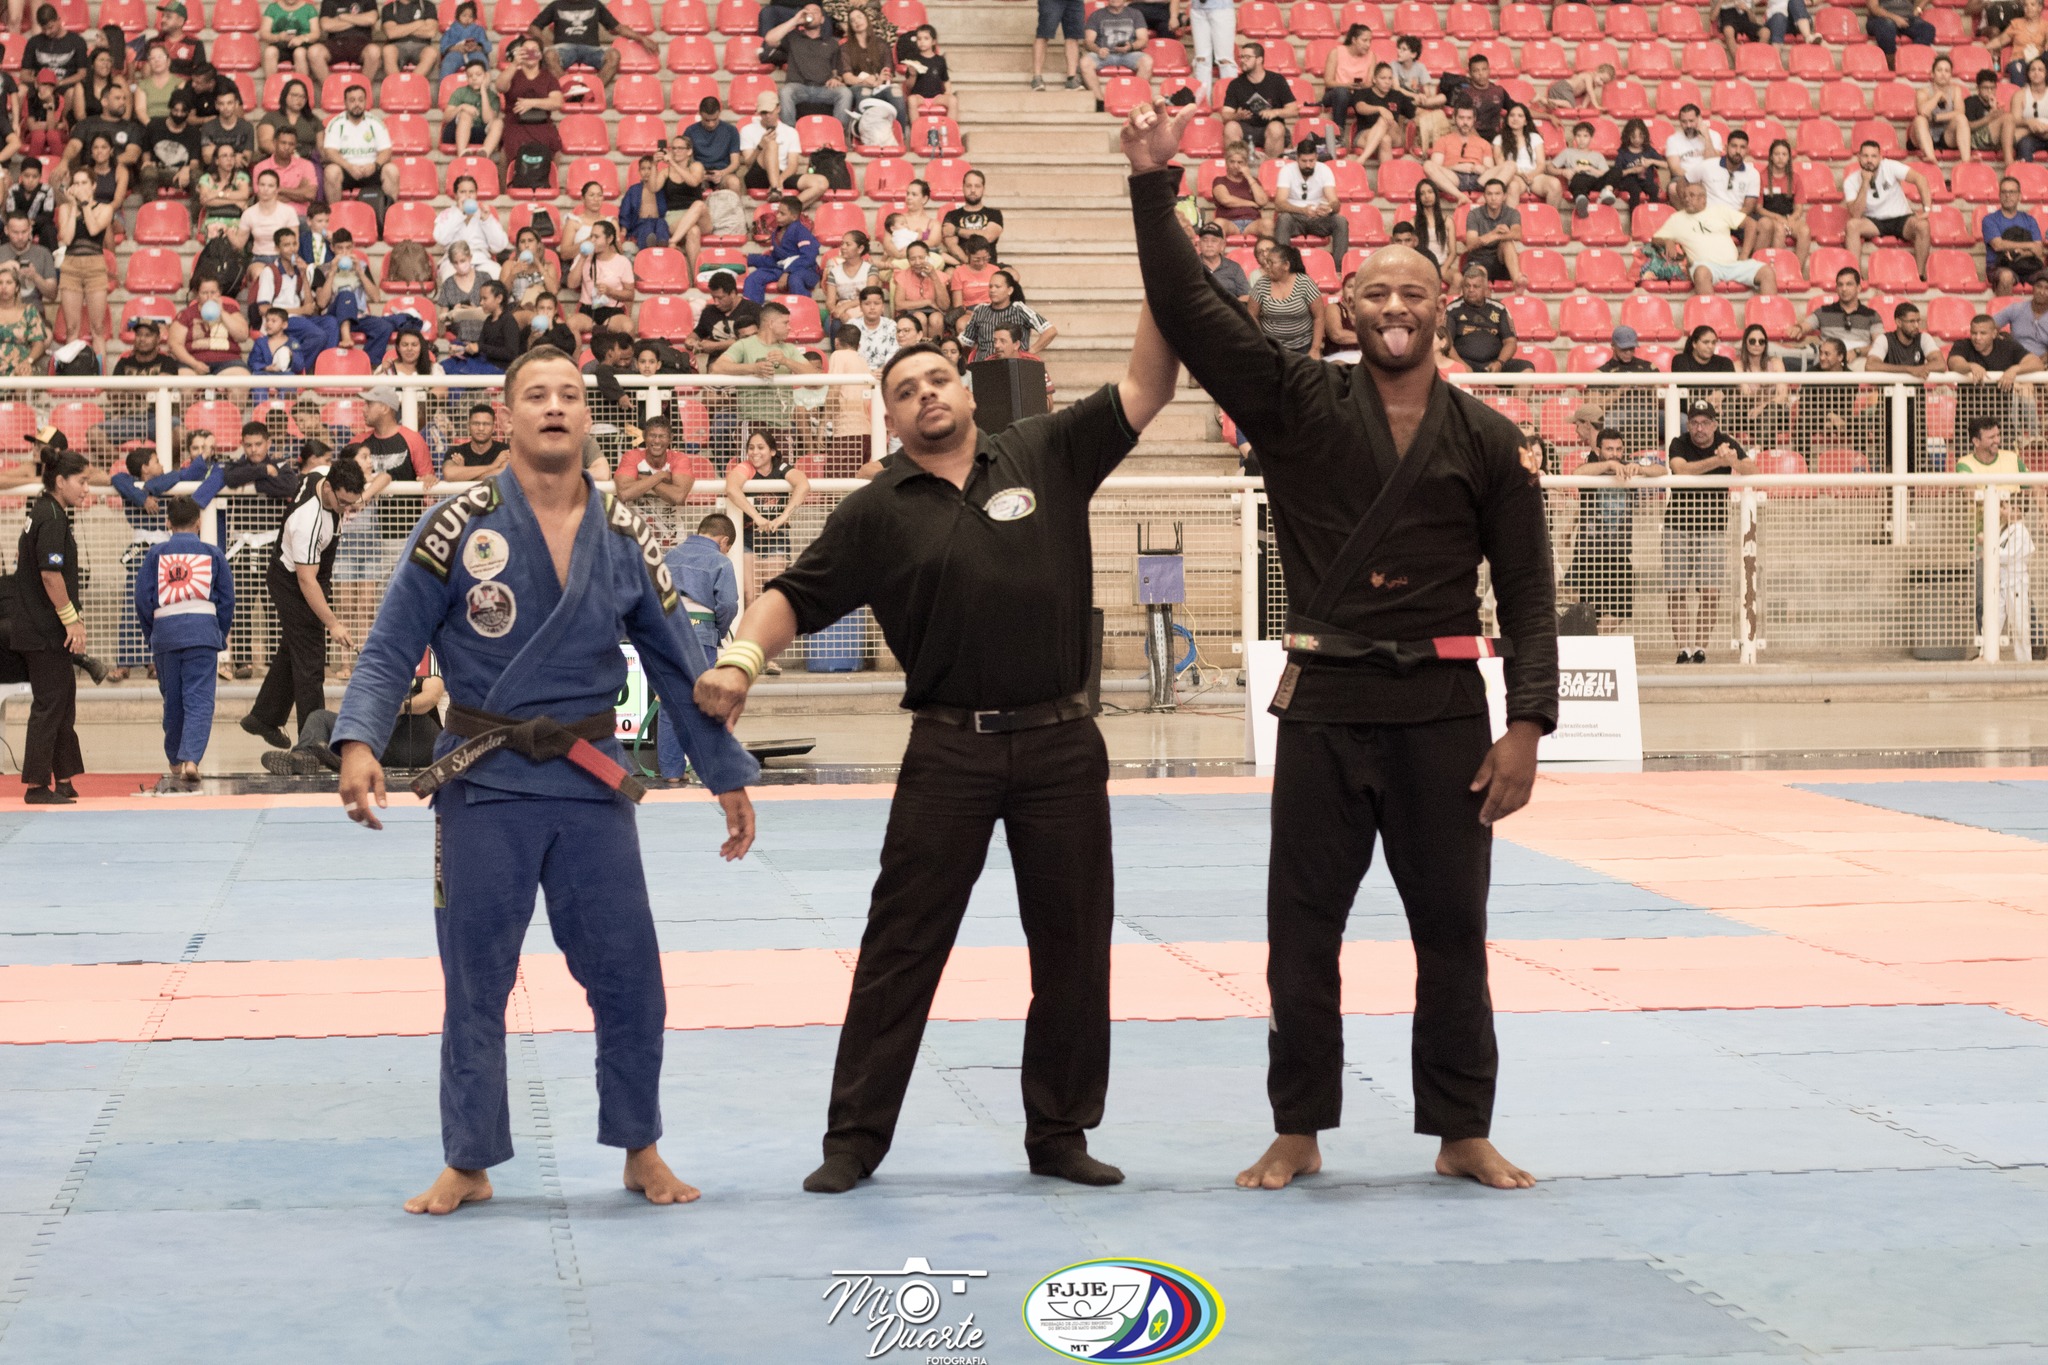 Campeonato Estadual de Jiu-Jitsu Esportivo de Mato Grosso teve lutas de alto nível (Foto: Michele Duarte)